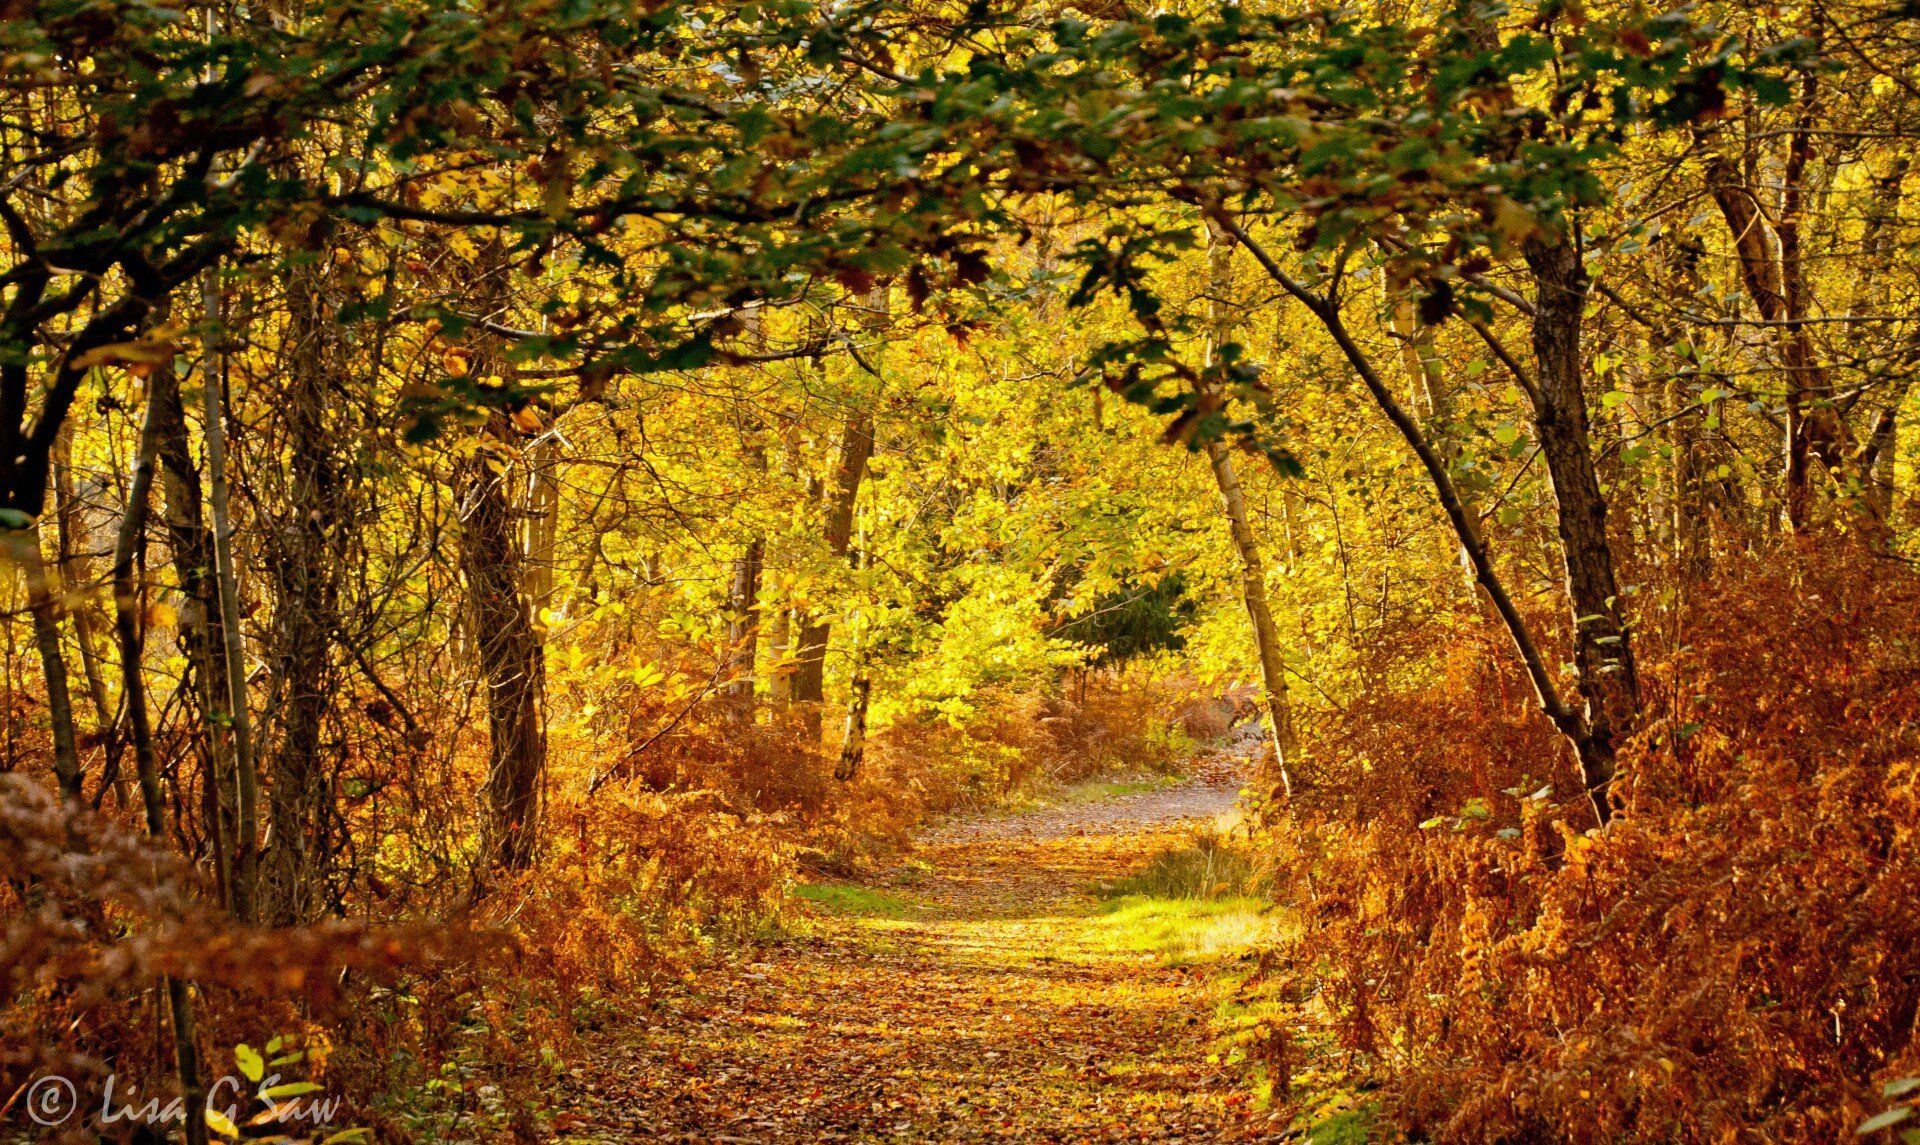 Autumn path through the golden canopy, Burton Mill Pond Woods